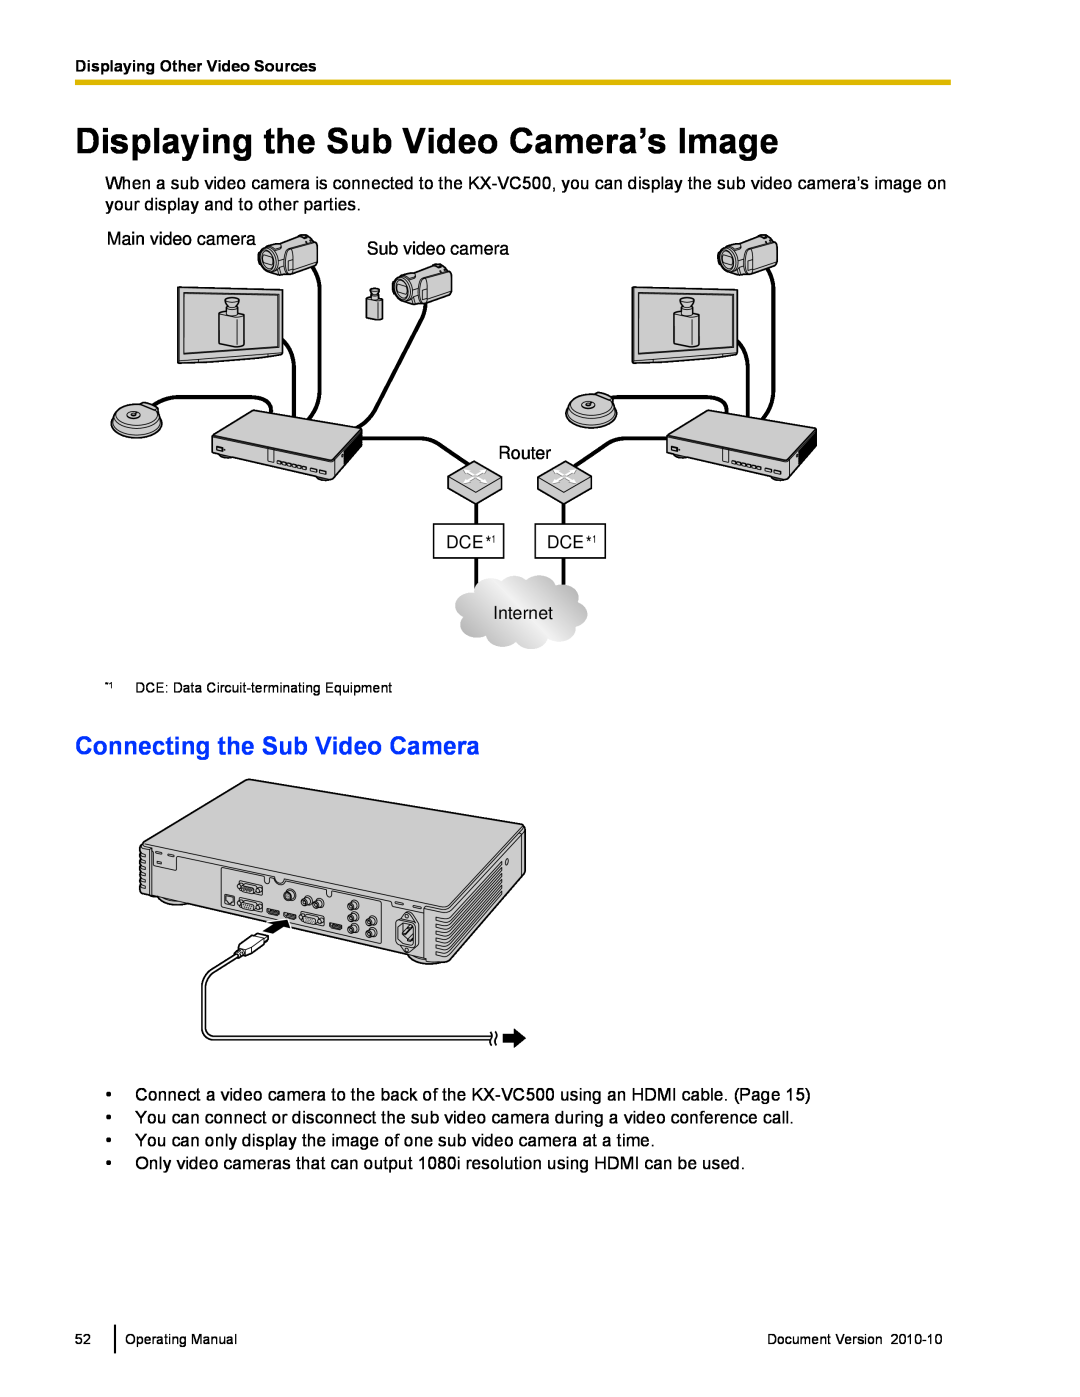 Panasonic KX-VC500 manual Displaying the Sub Video Camera’s Image, Connecting the Sub Video Camera 